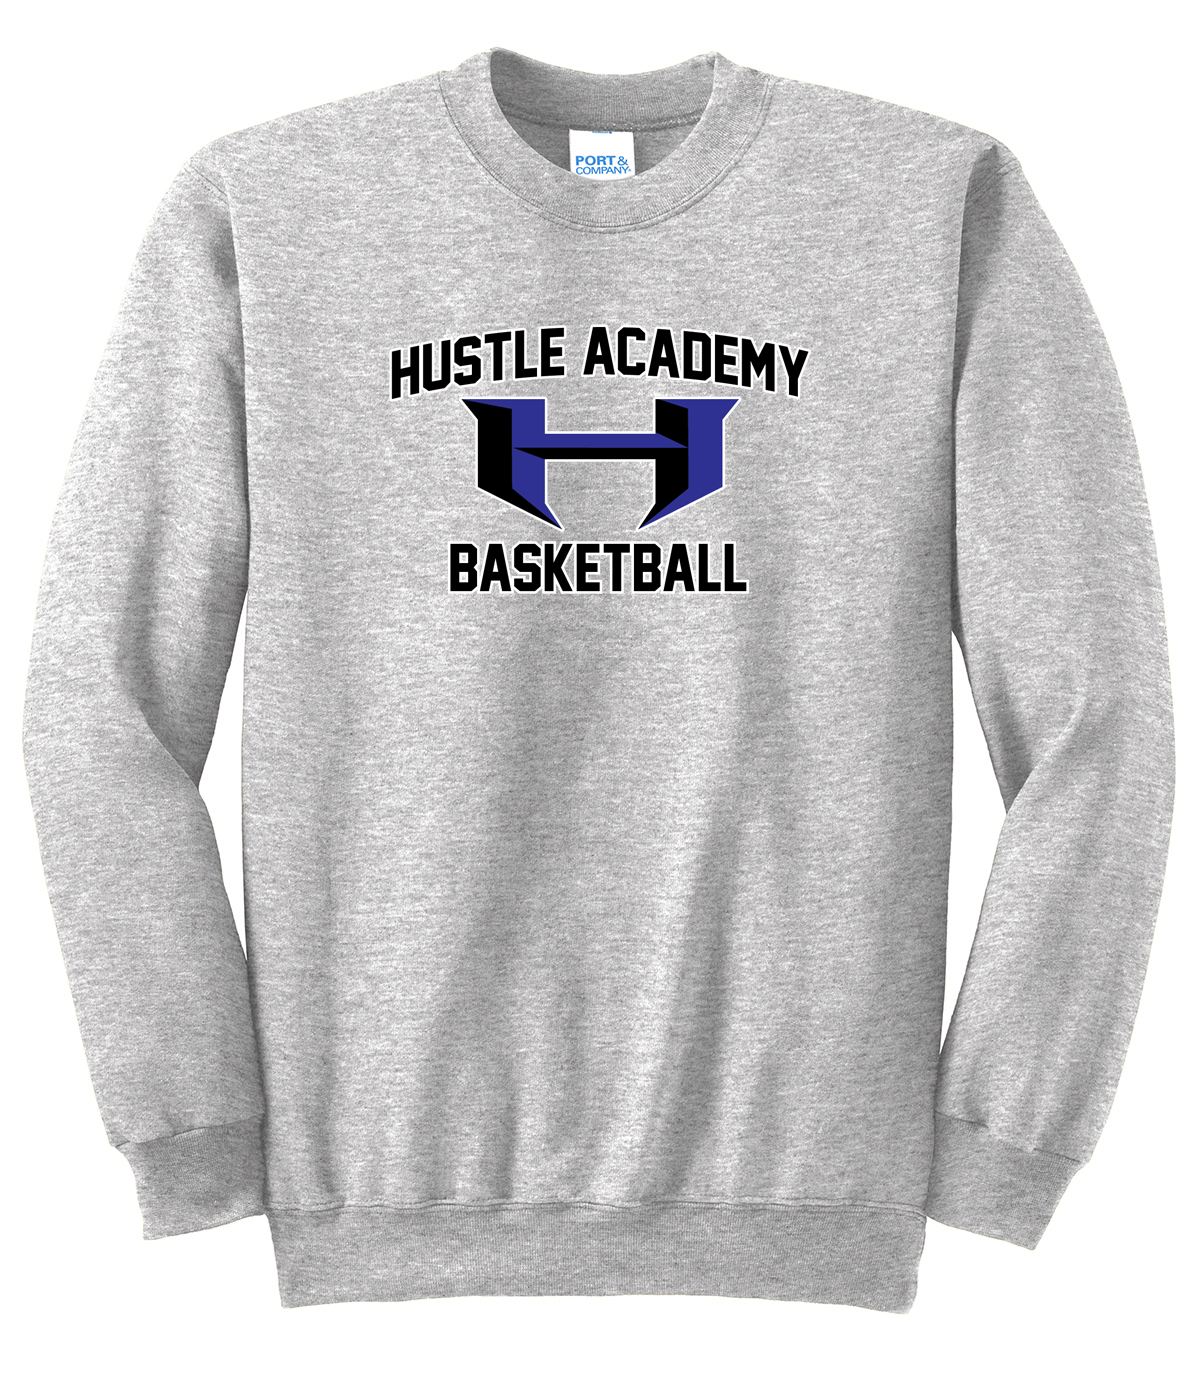 Hustle Academy Basketball Crew Neck Sweater